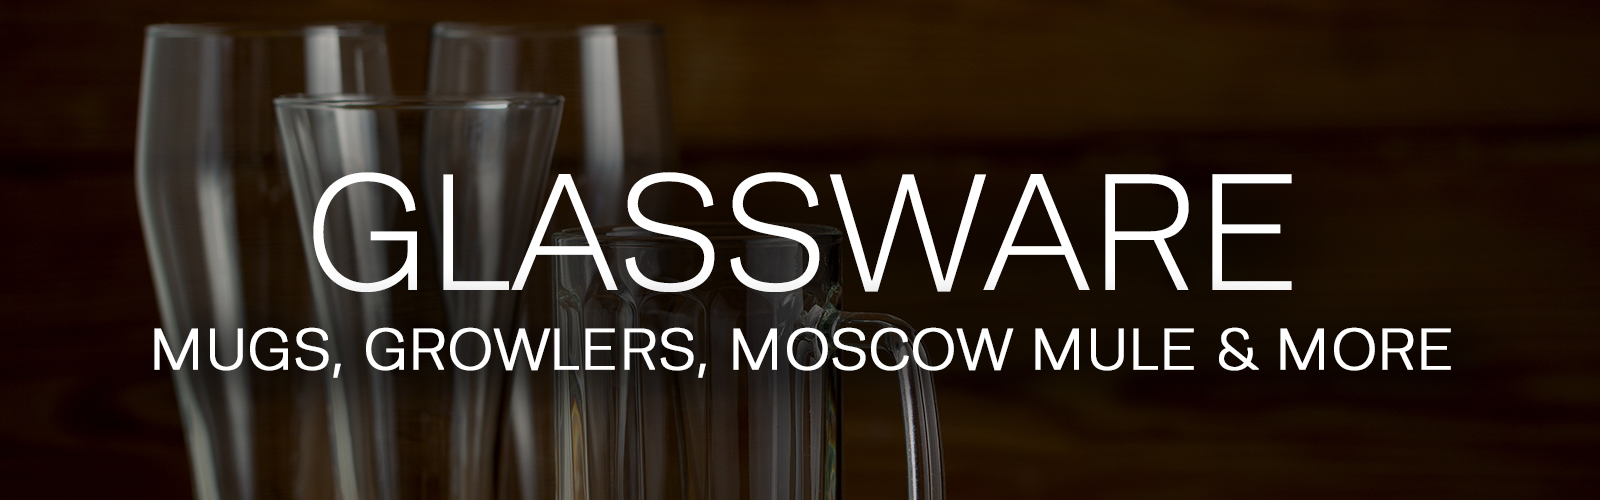 Glassware-1600px